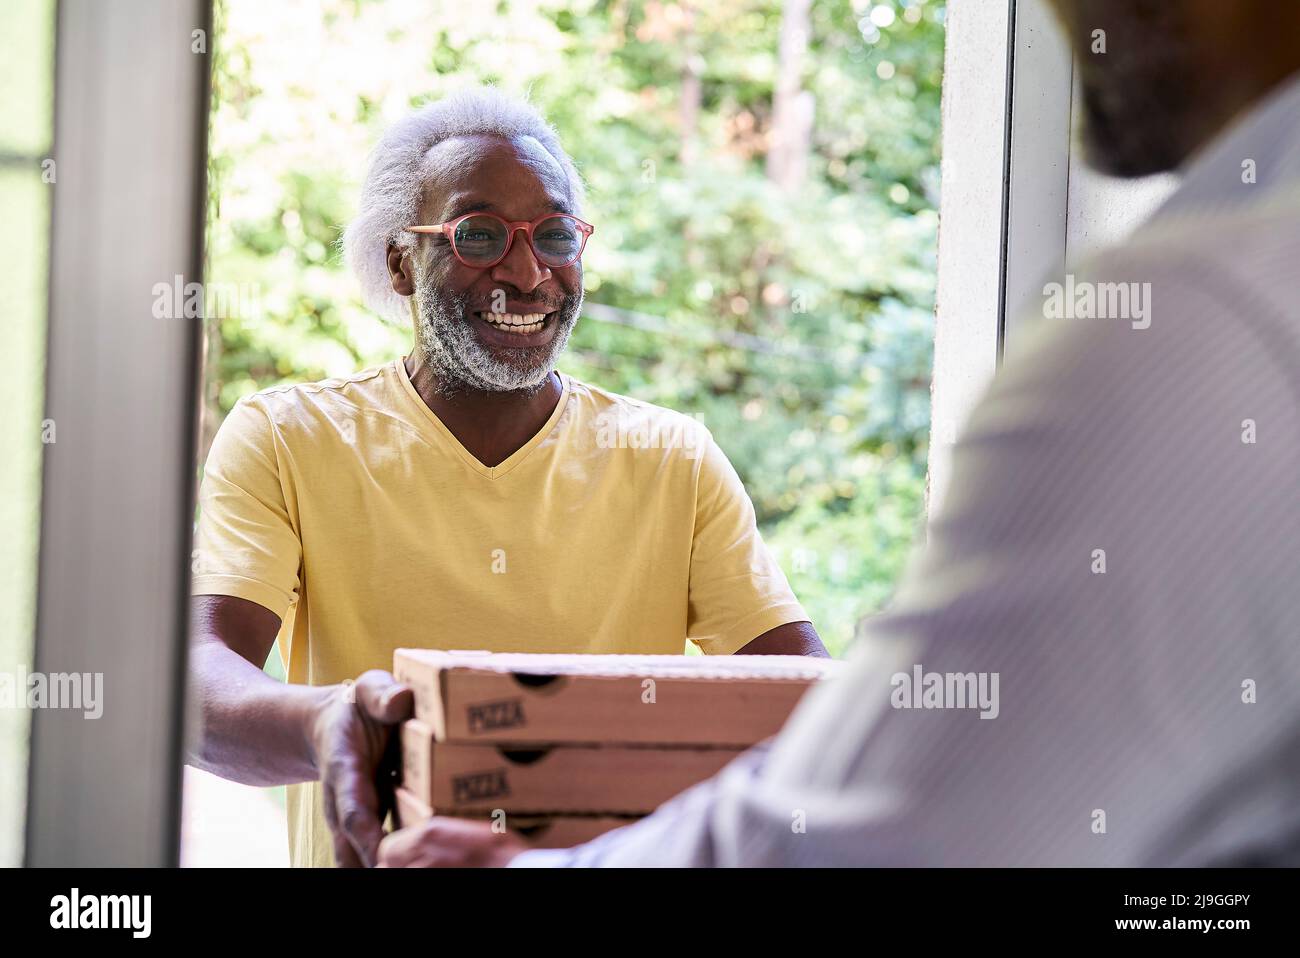 Senior deliveryman delivering pizza to man at doorstep Stock Photo